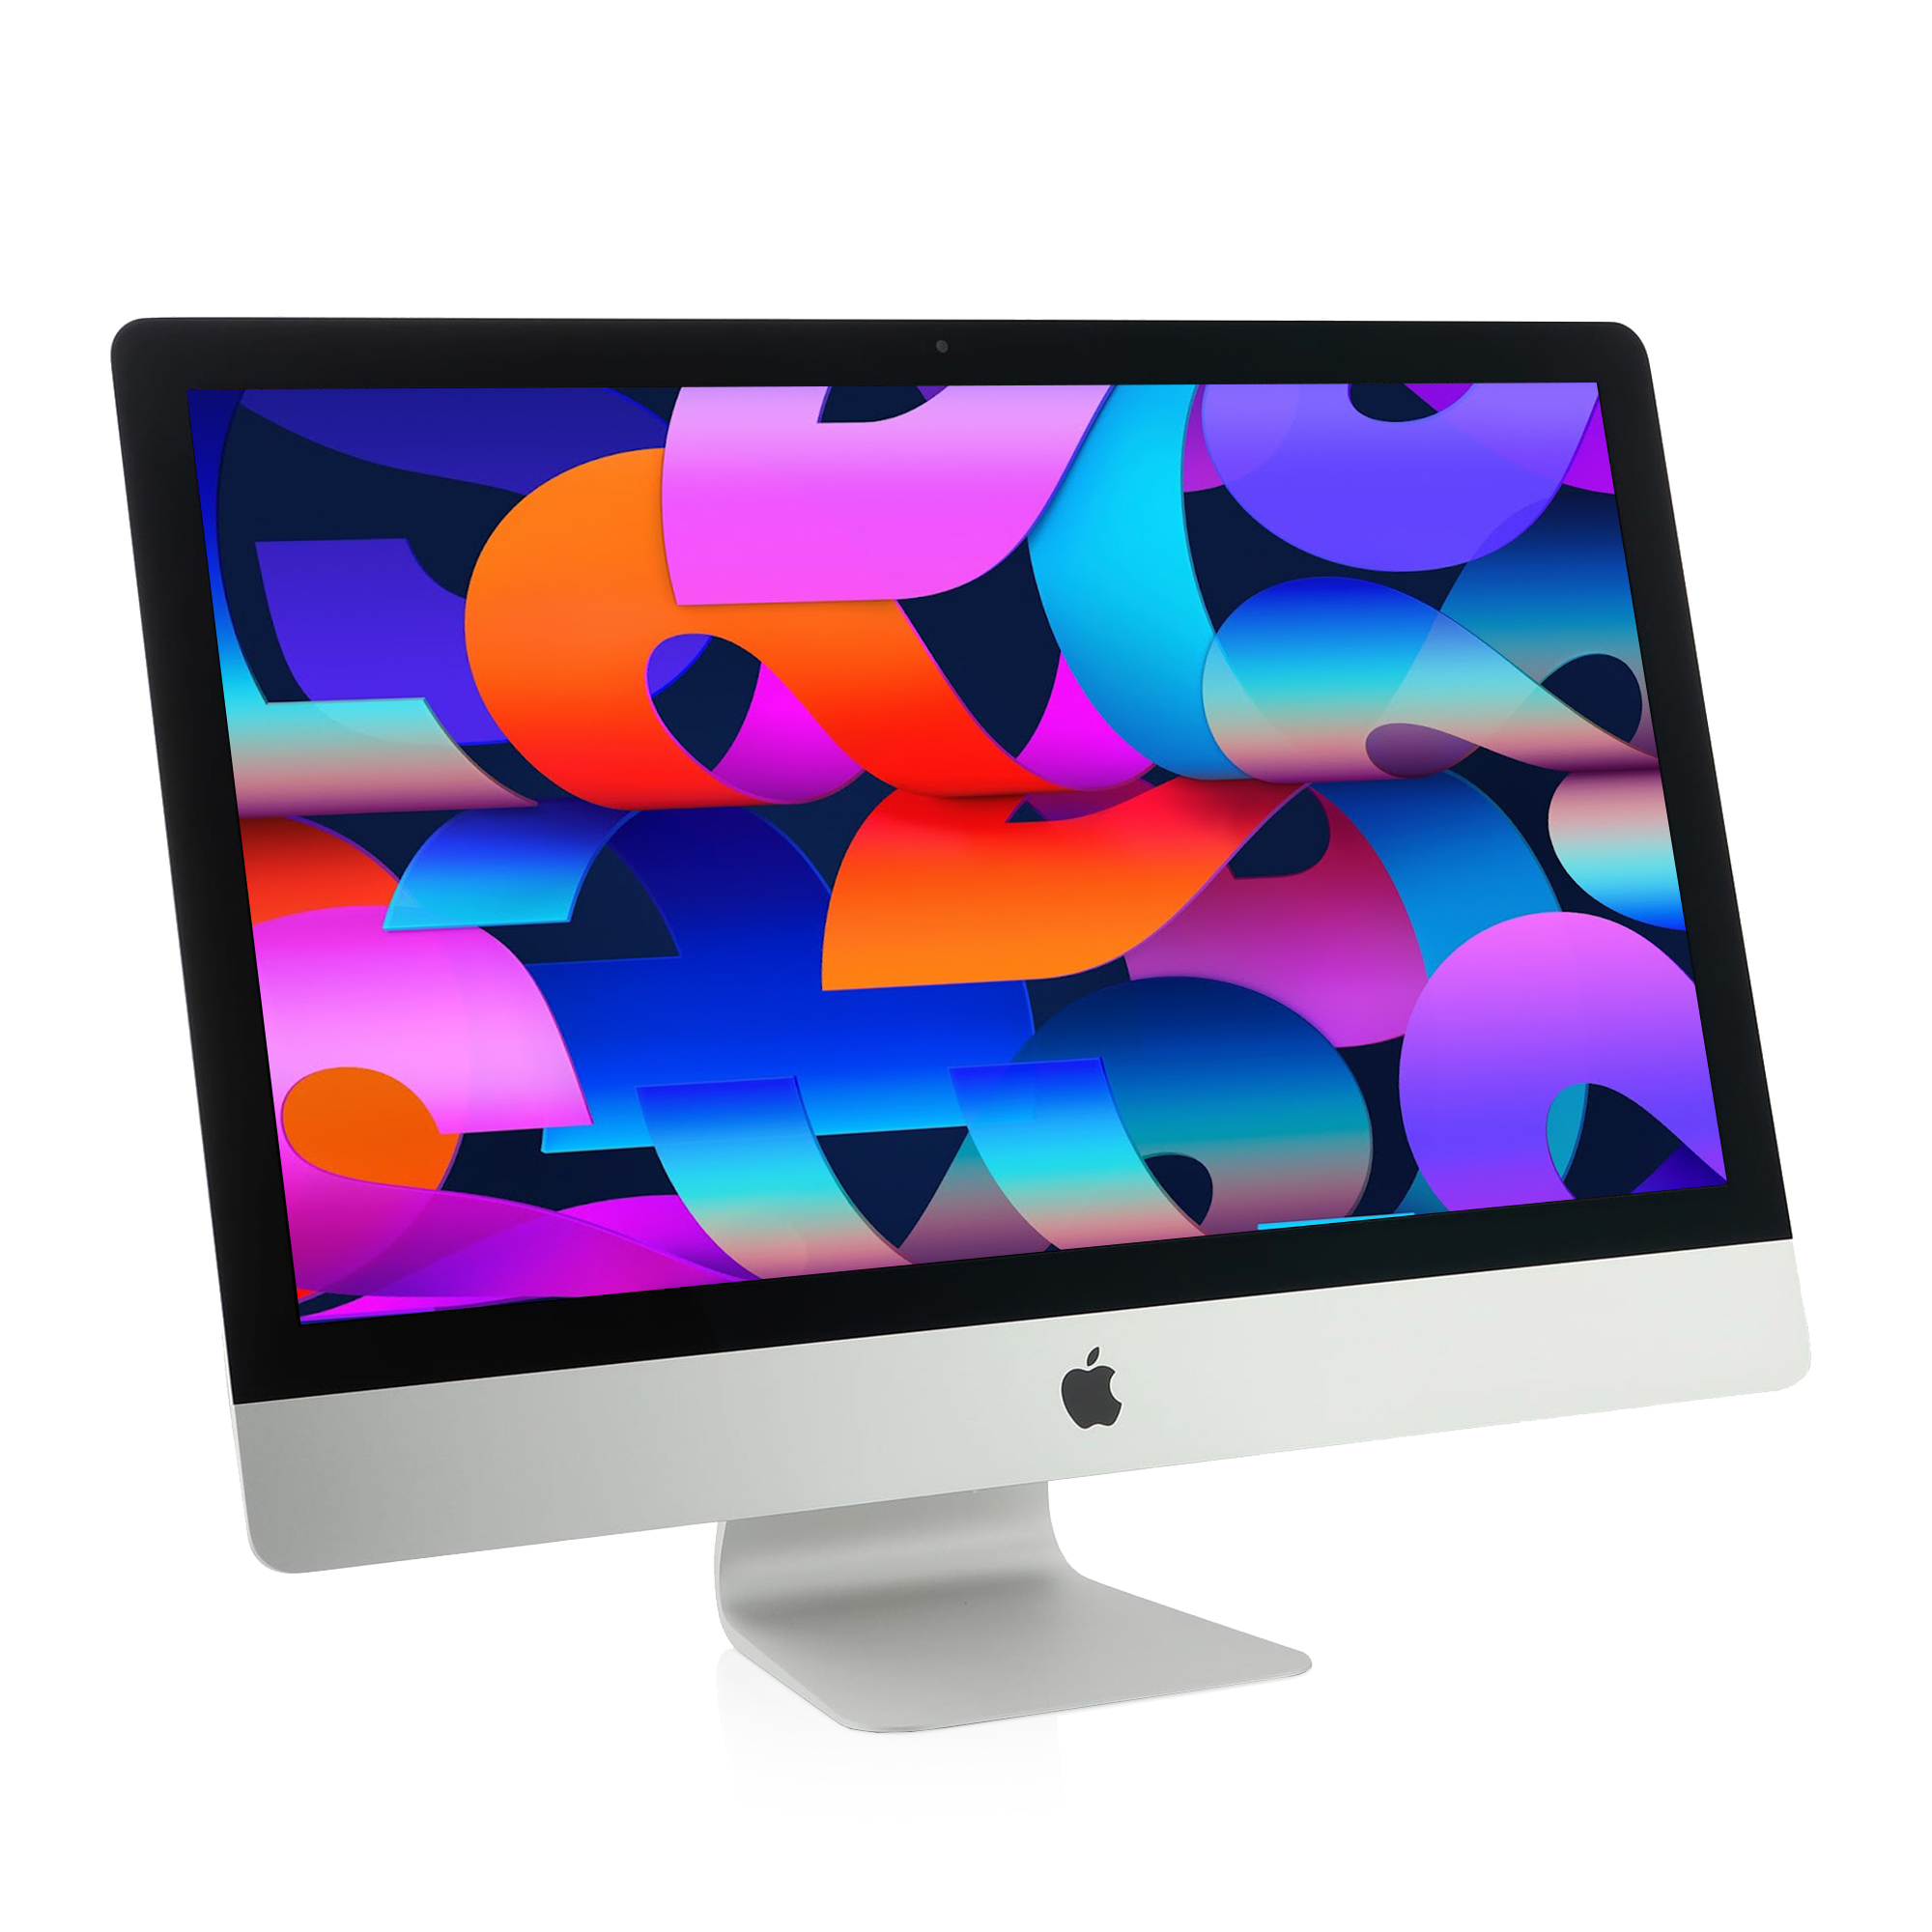 2019 Apple iMac 5K 27-inch Intel i9 3.6 GHz 8-core 16GB 256GB Vega 48 8GB - 